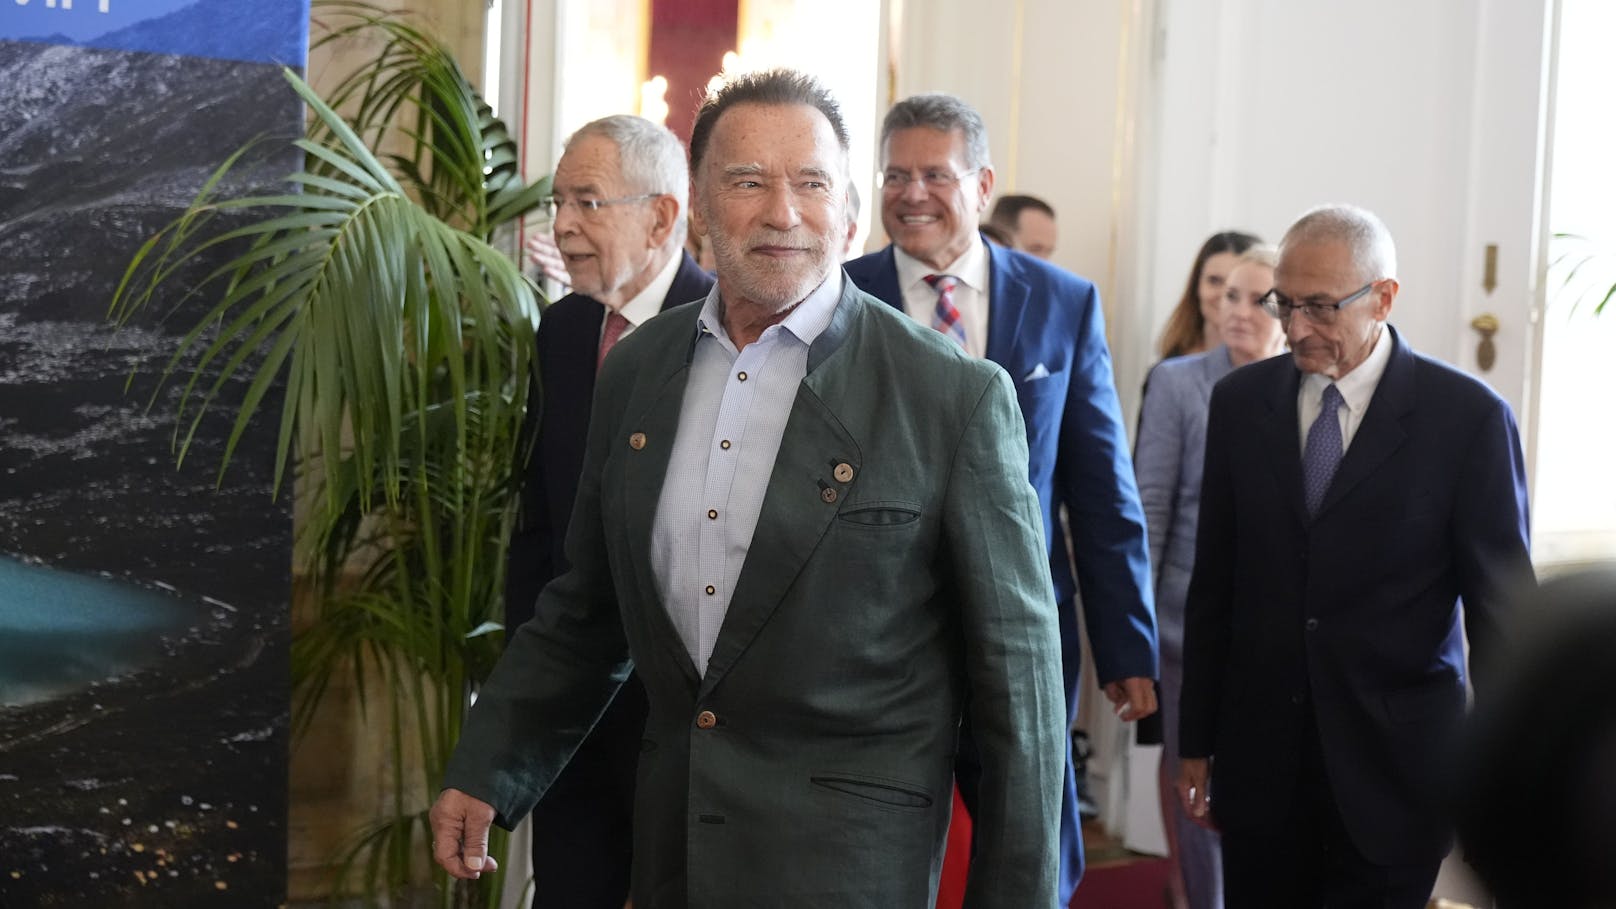 Arnold Schwarzenegger warnt: "Stoppt das Bluten"